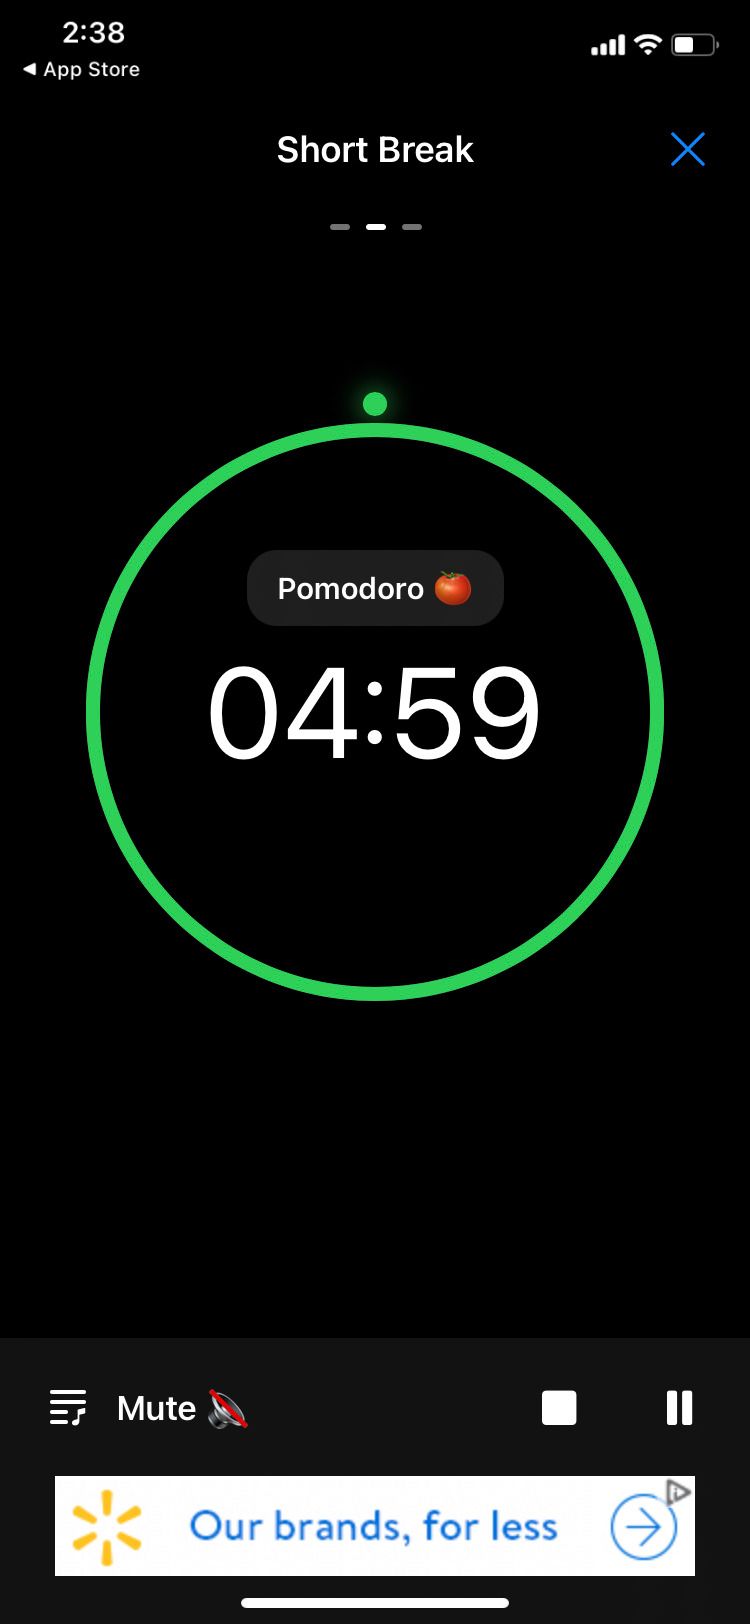 Pomodoro Focus Timer app short break screen